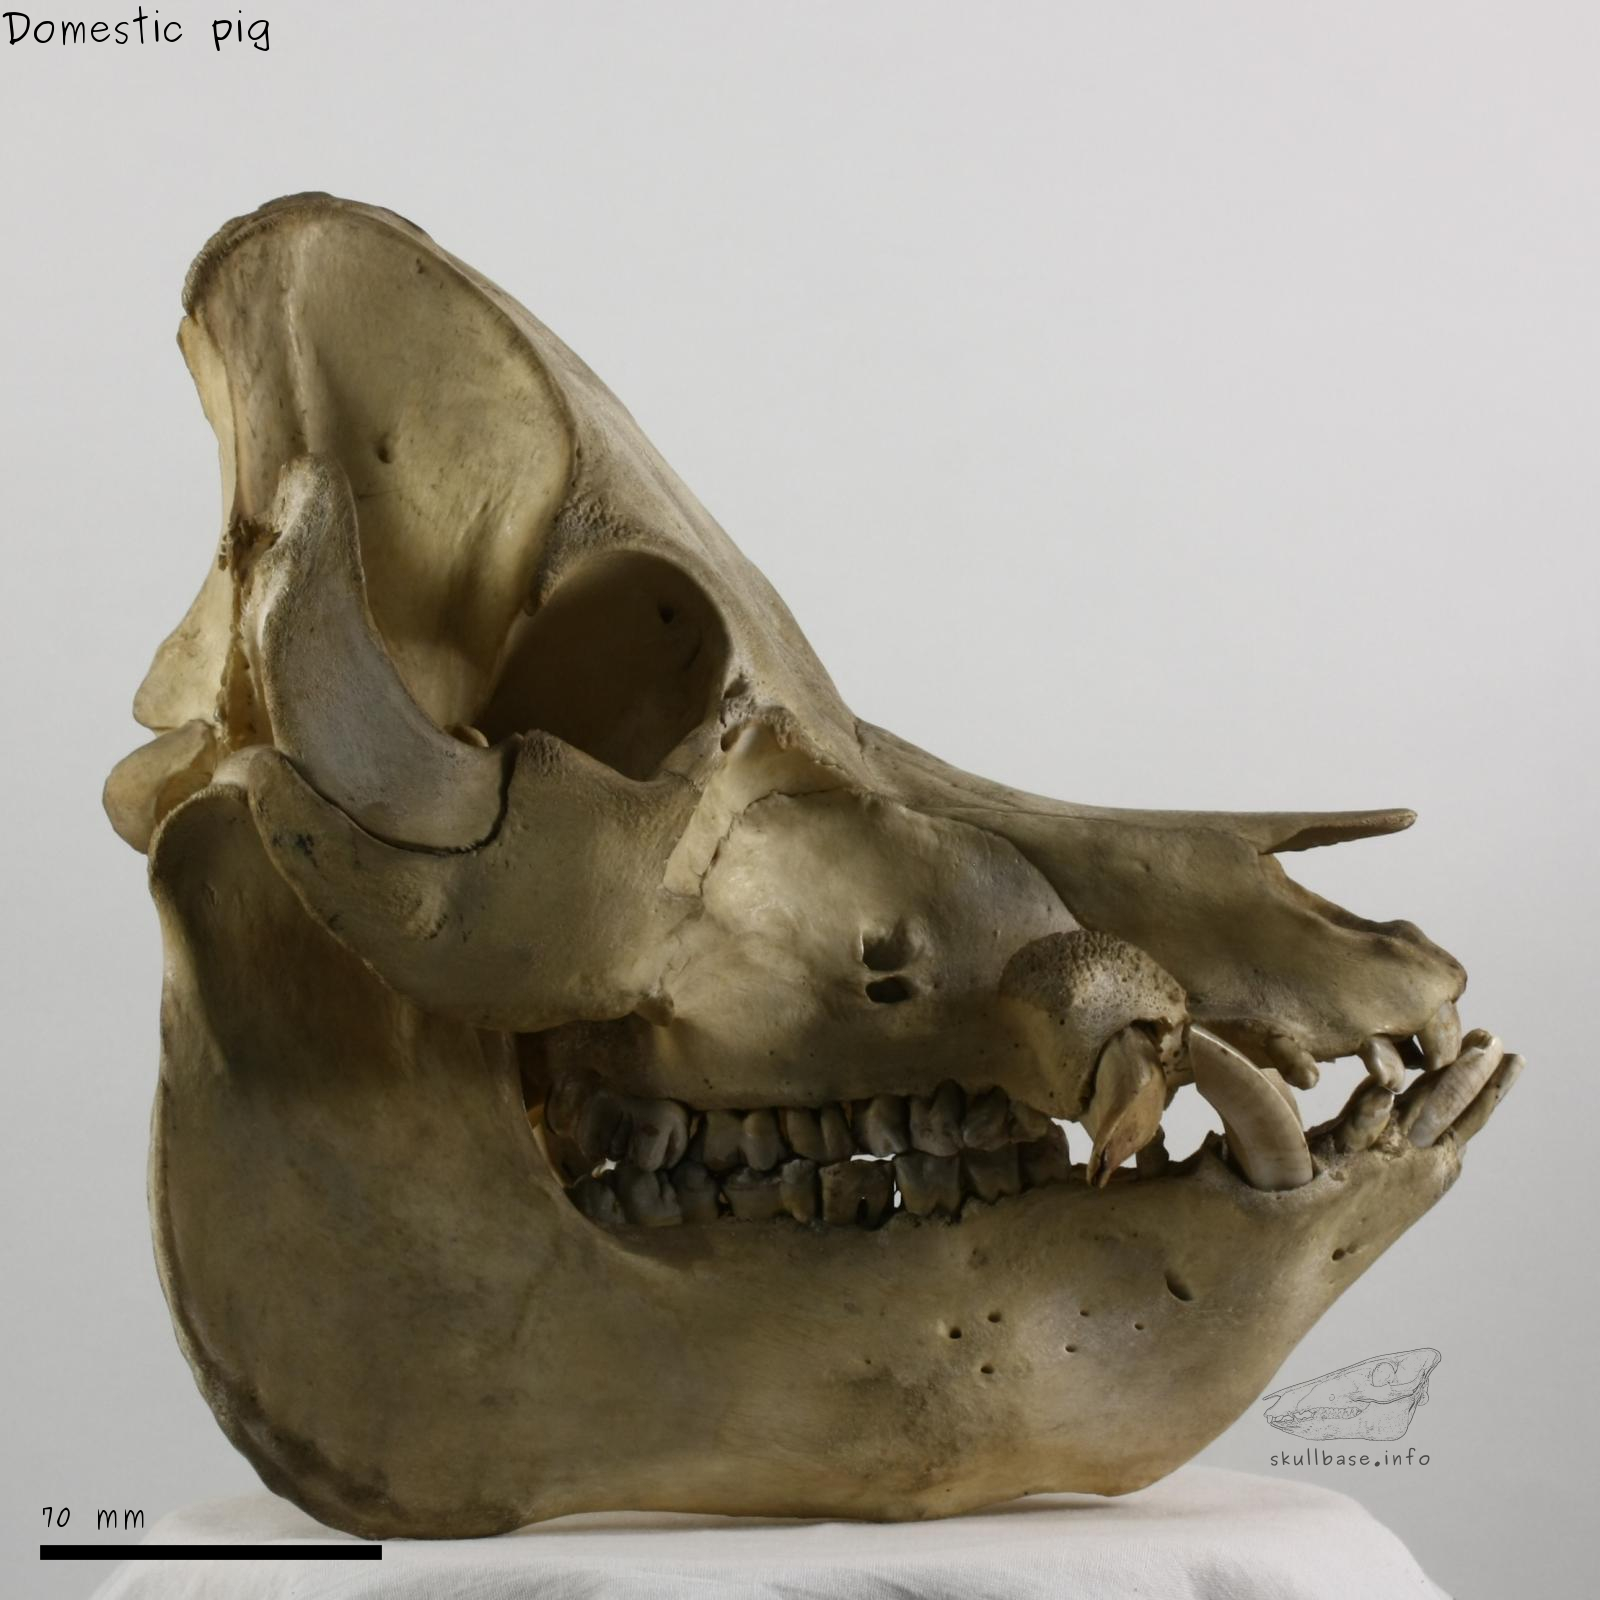 Domestic pig (Sus scrofa domesticus) skull lateral view